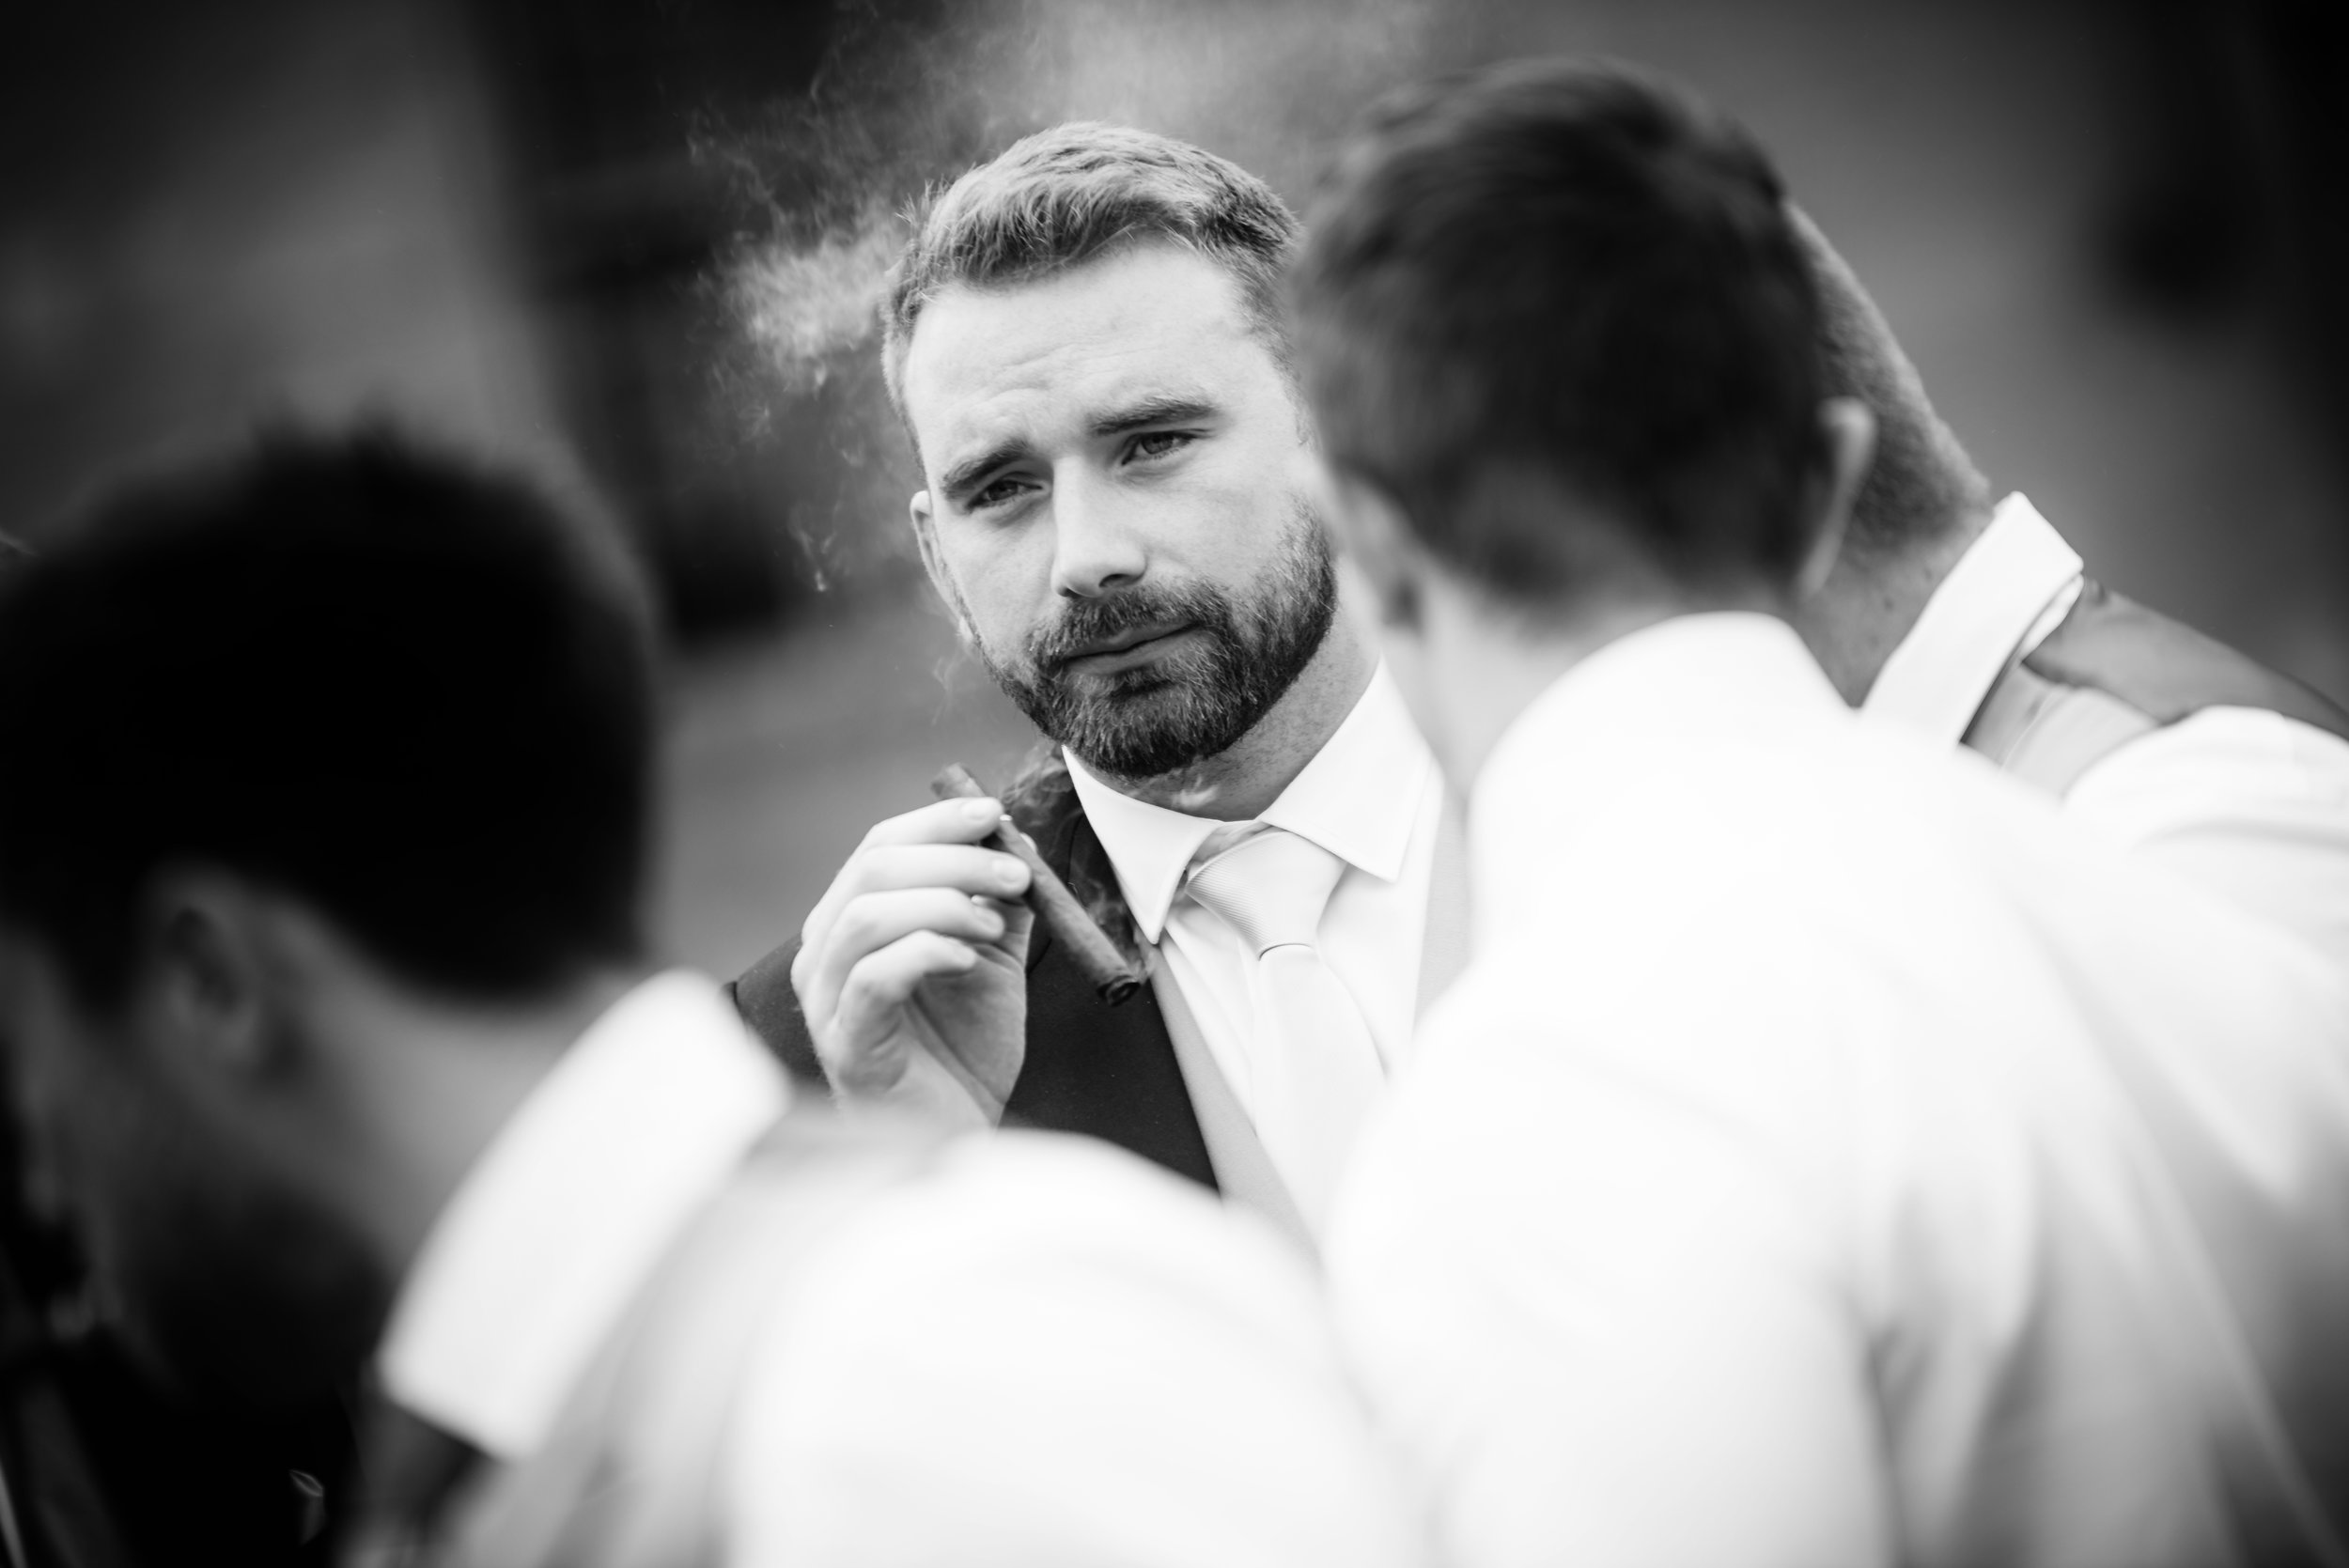 The groomsmen cigar time